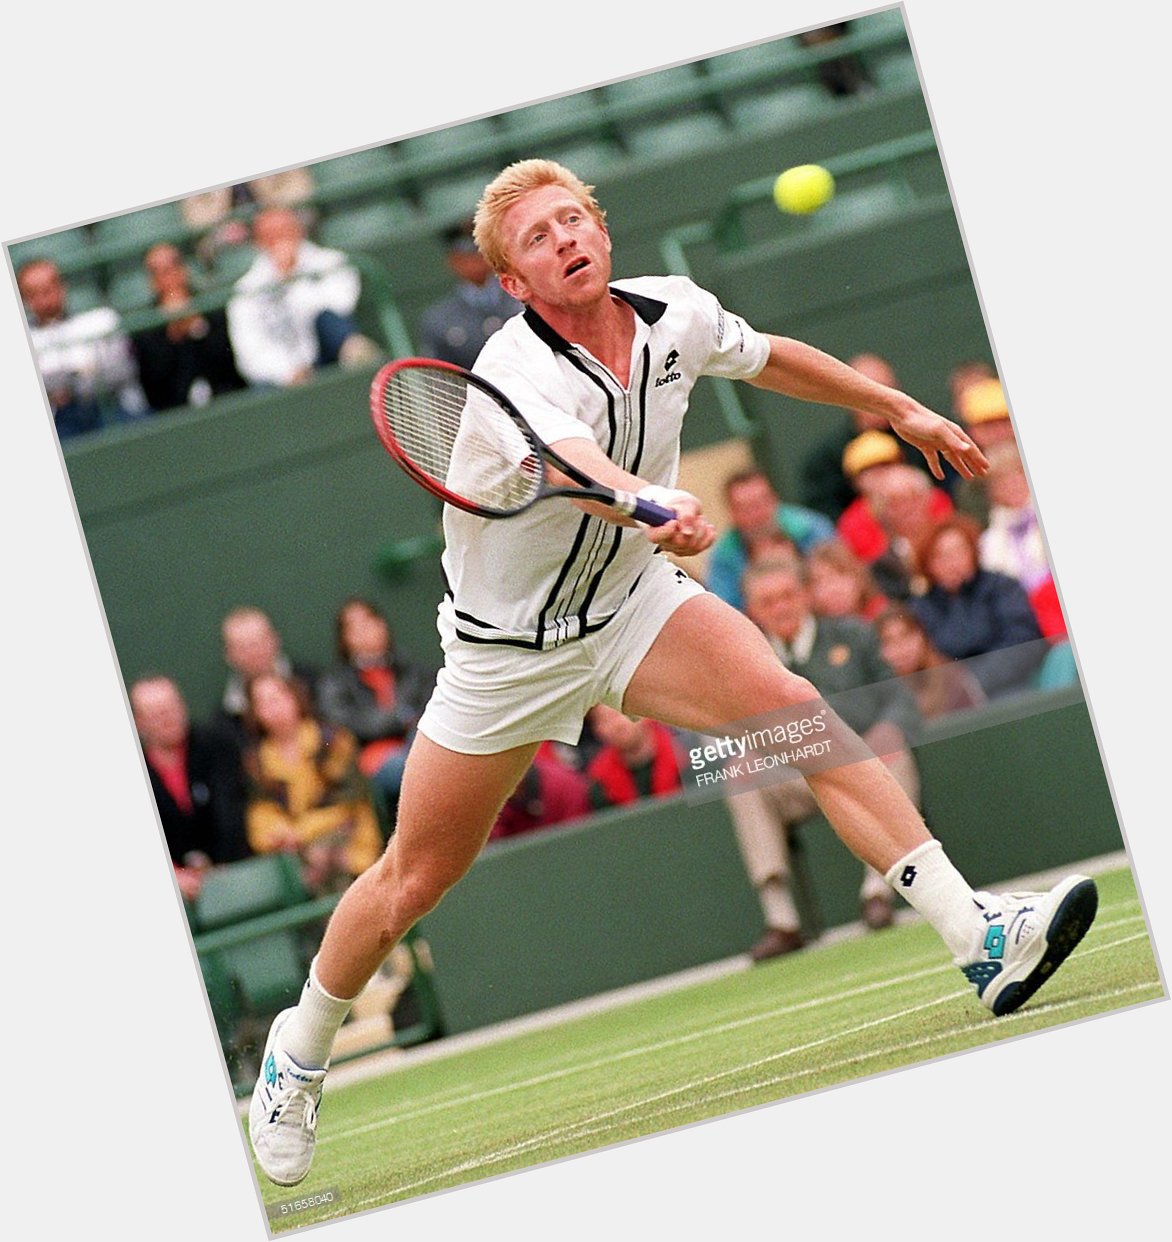 Happy Birthday to Boris Becker who turns 50 today! 